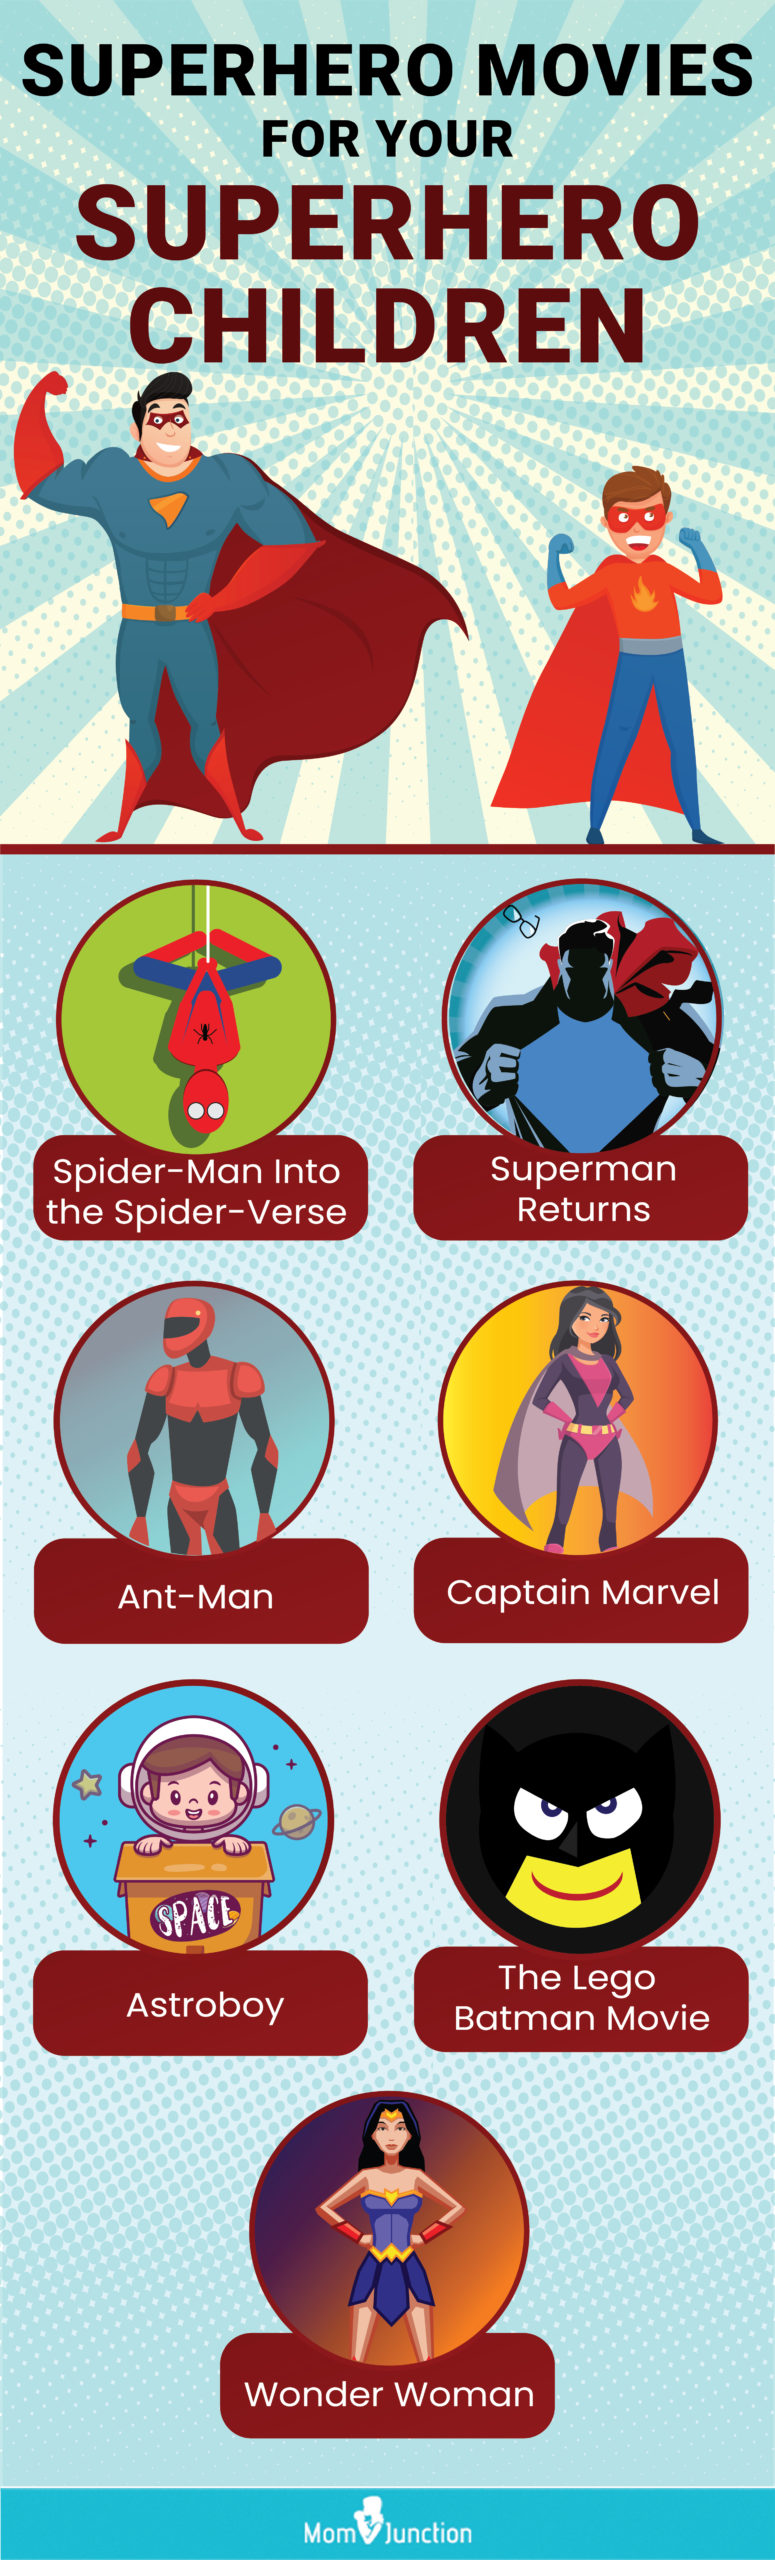 superhero movie for your super hero children (infographic)